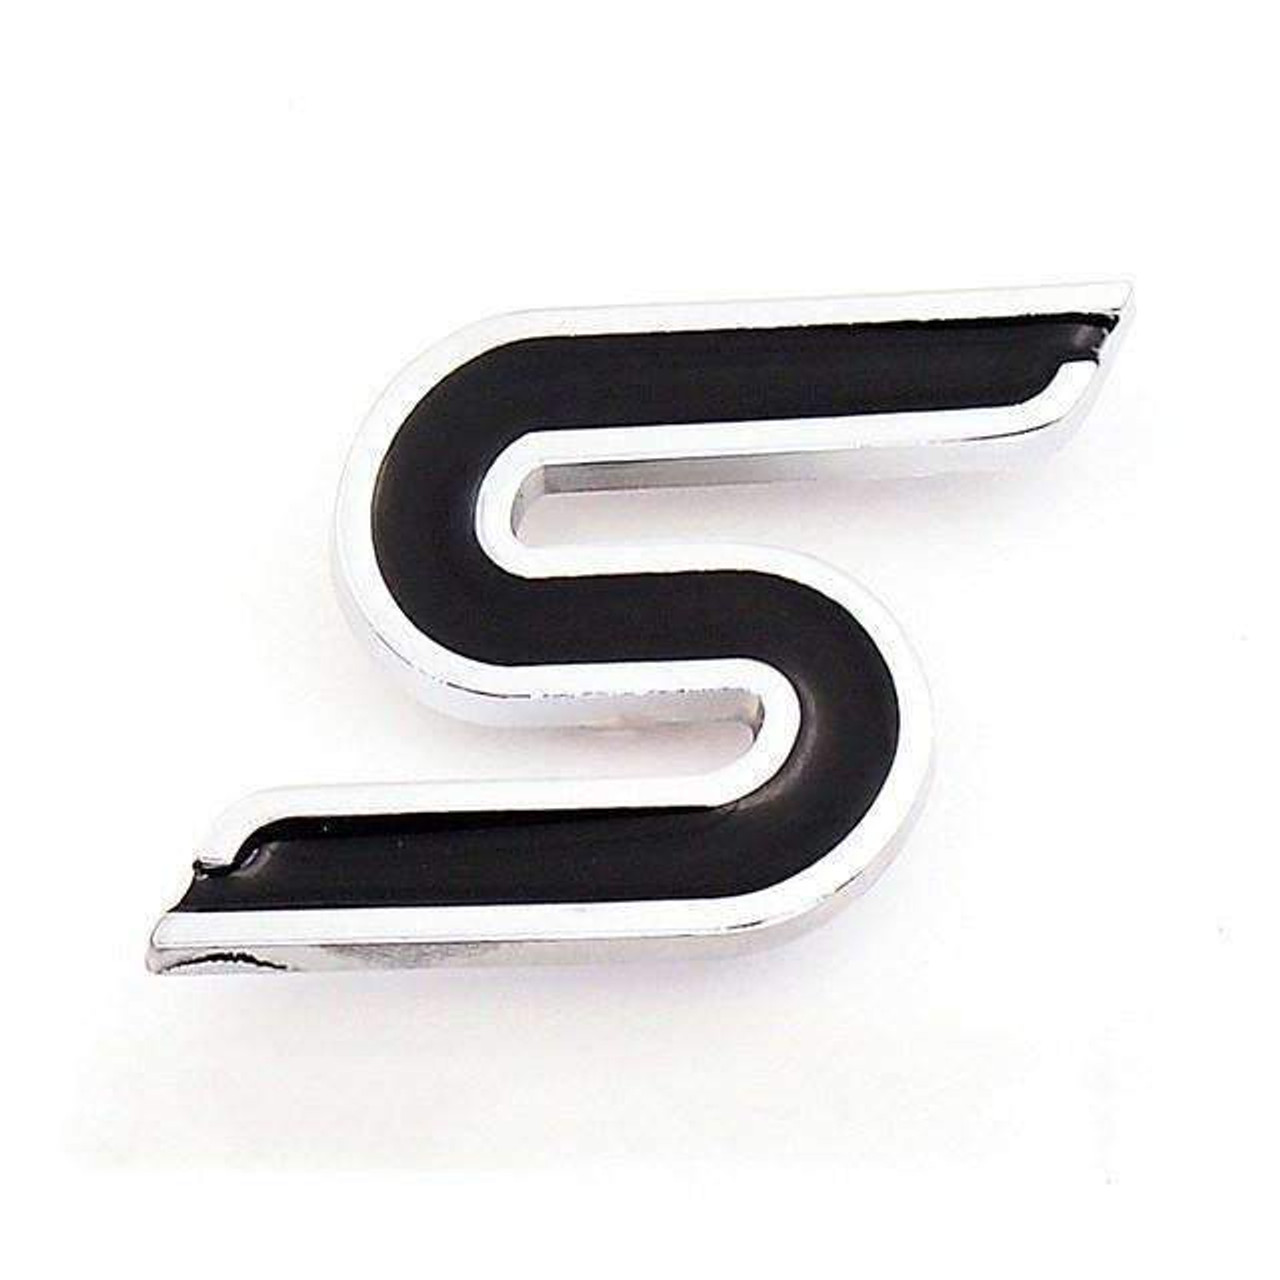 S Emblem Badge Sticker Car Styling for Ford [Black, Metal, Sticker] -  Natalex Auto